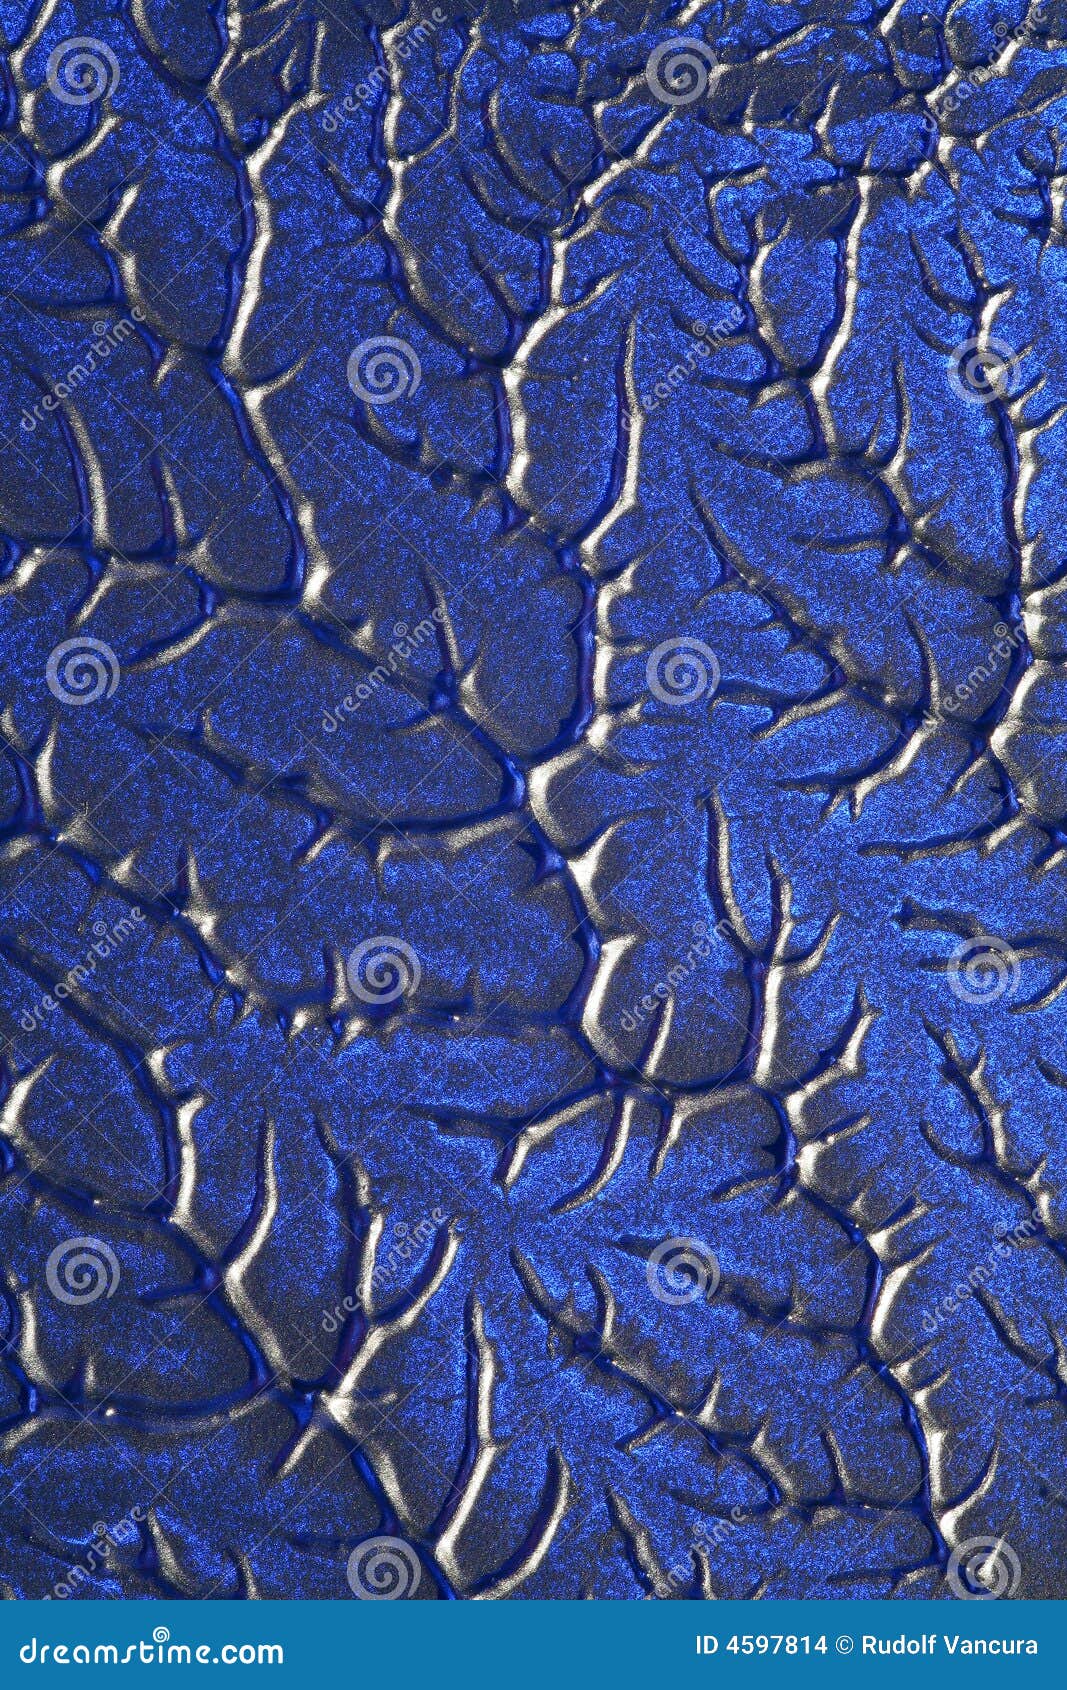 abstract bluish background